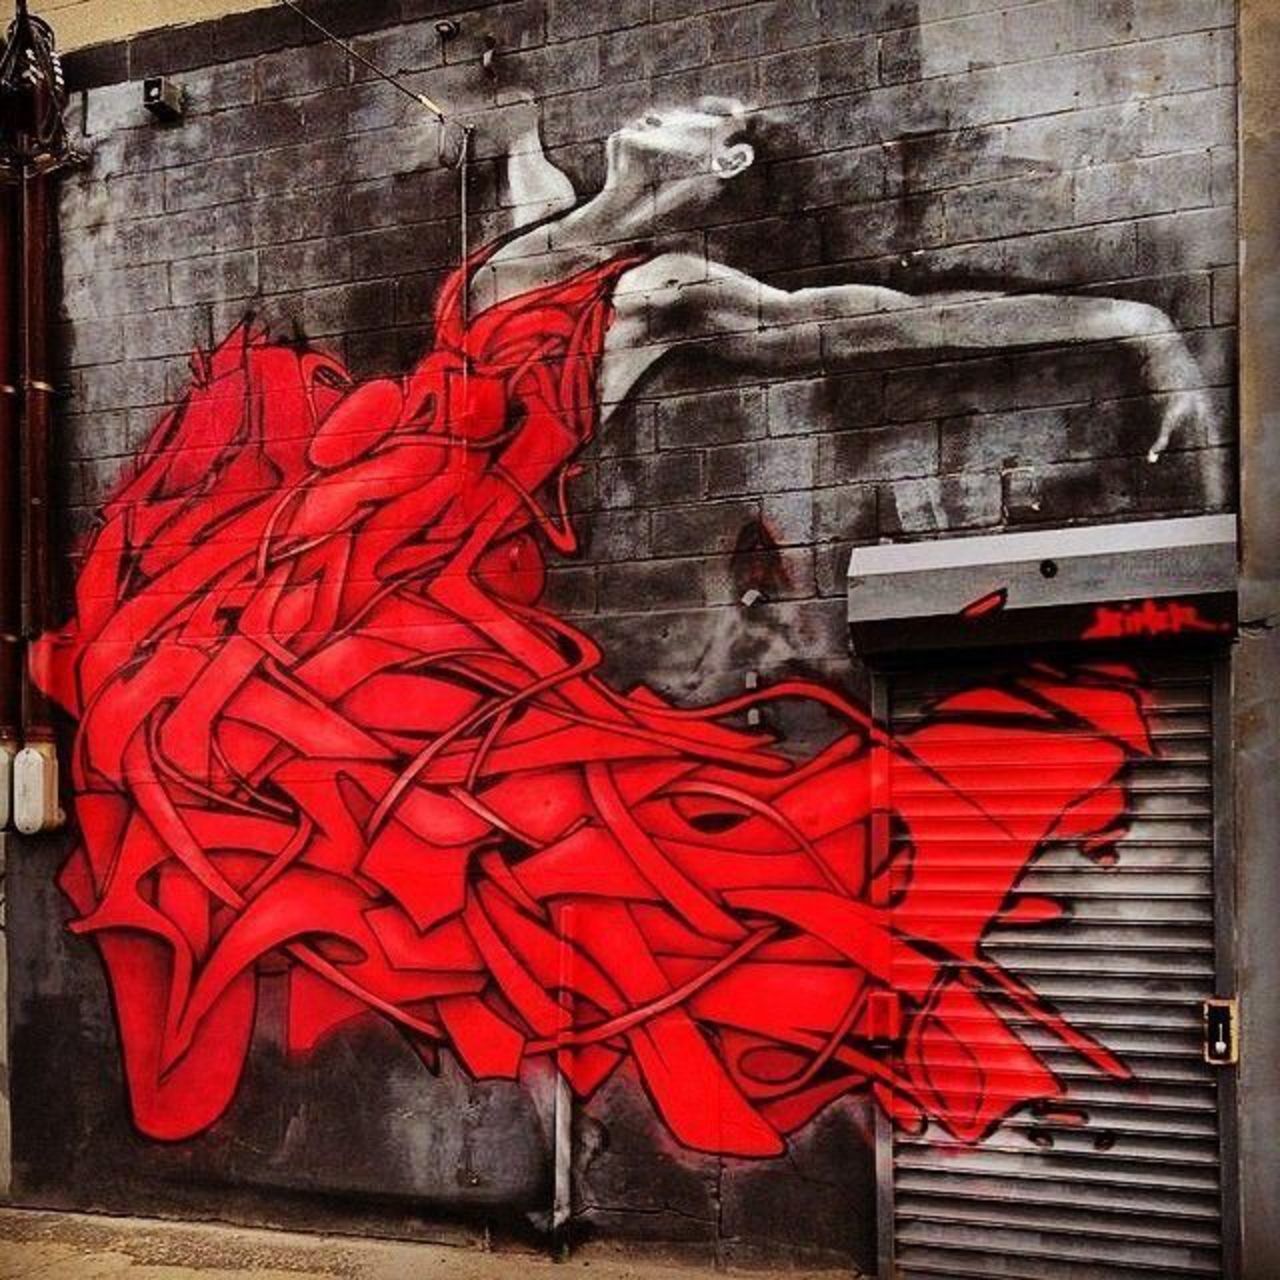 ZIMER in NYC#streetart #mural #art #graffiti https://t.co/Kew9W1ArsY